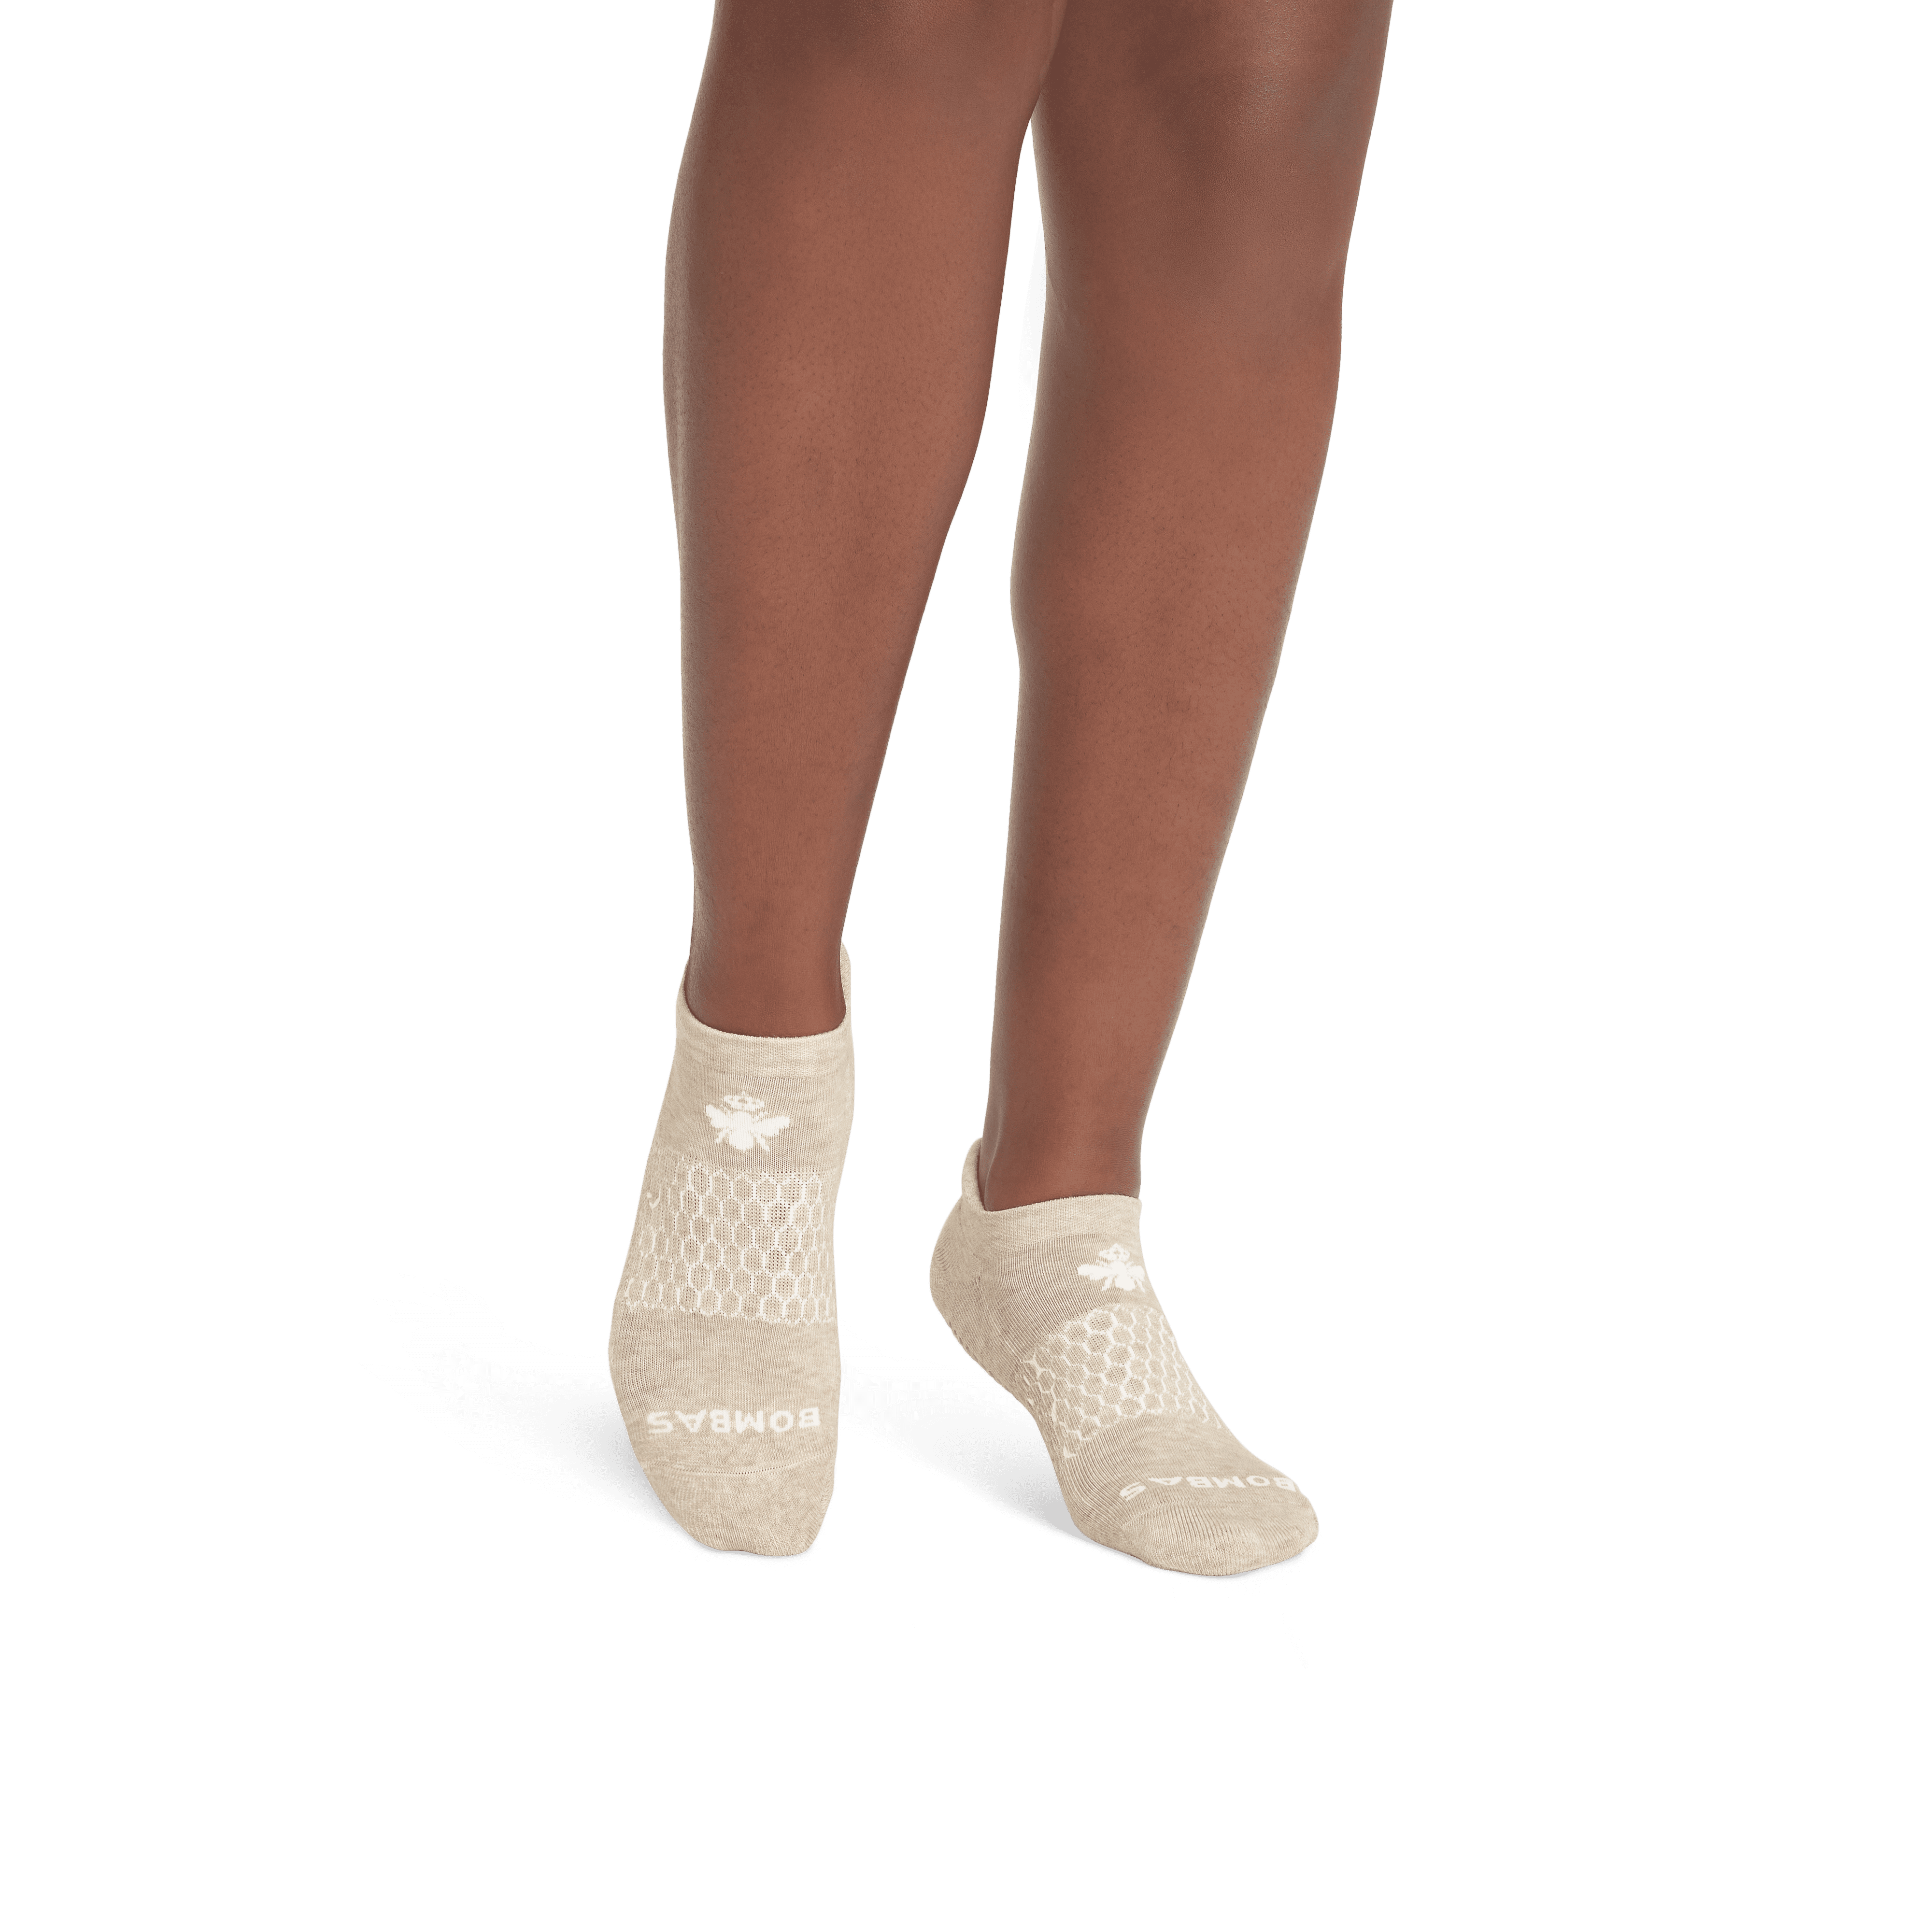 Random color 5 pairs Women's Performance Gripper Ankle Socks Bombas all L